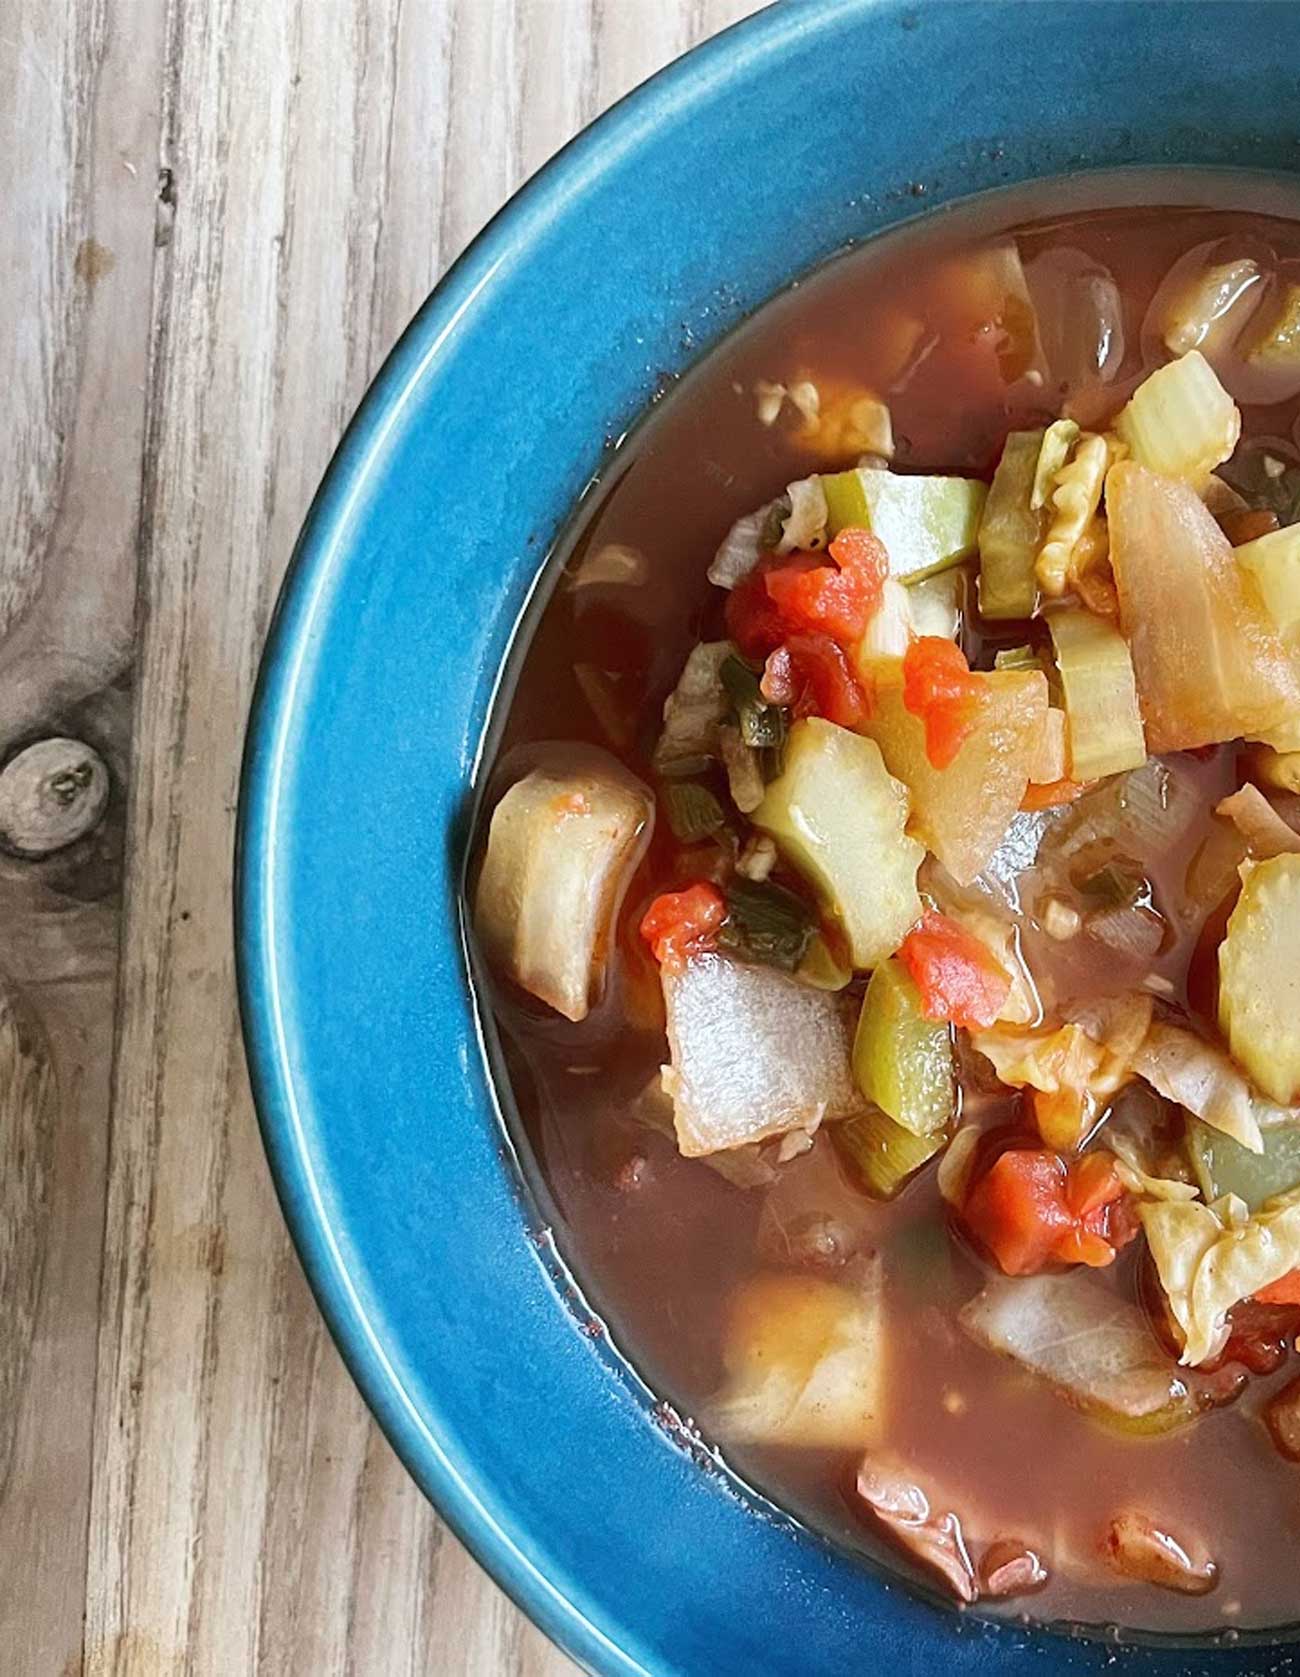 Wholesome and Delicious: The Original Cabbage Soup Recipe